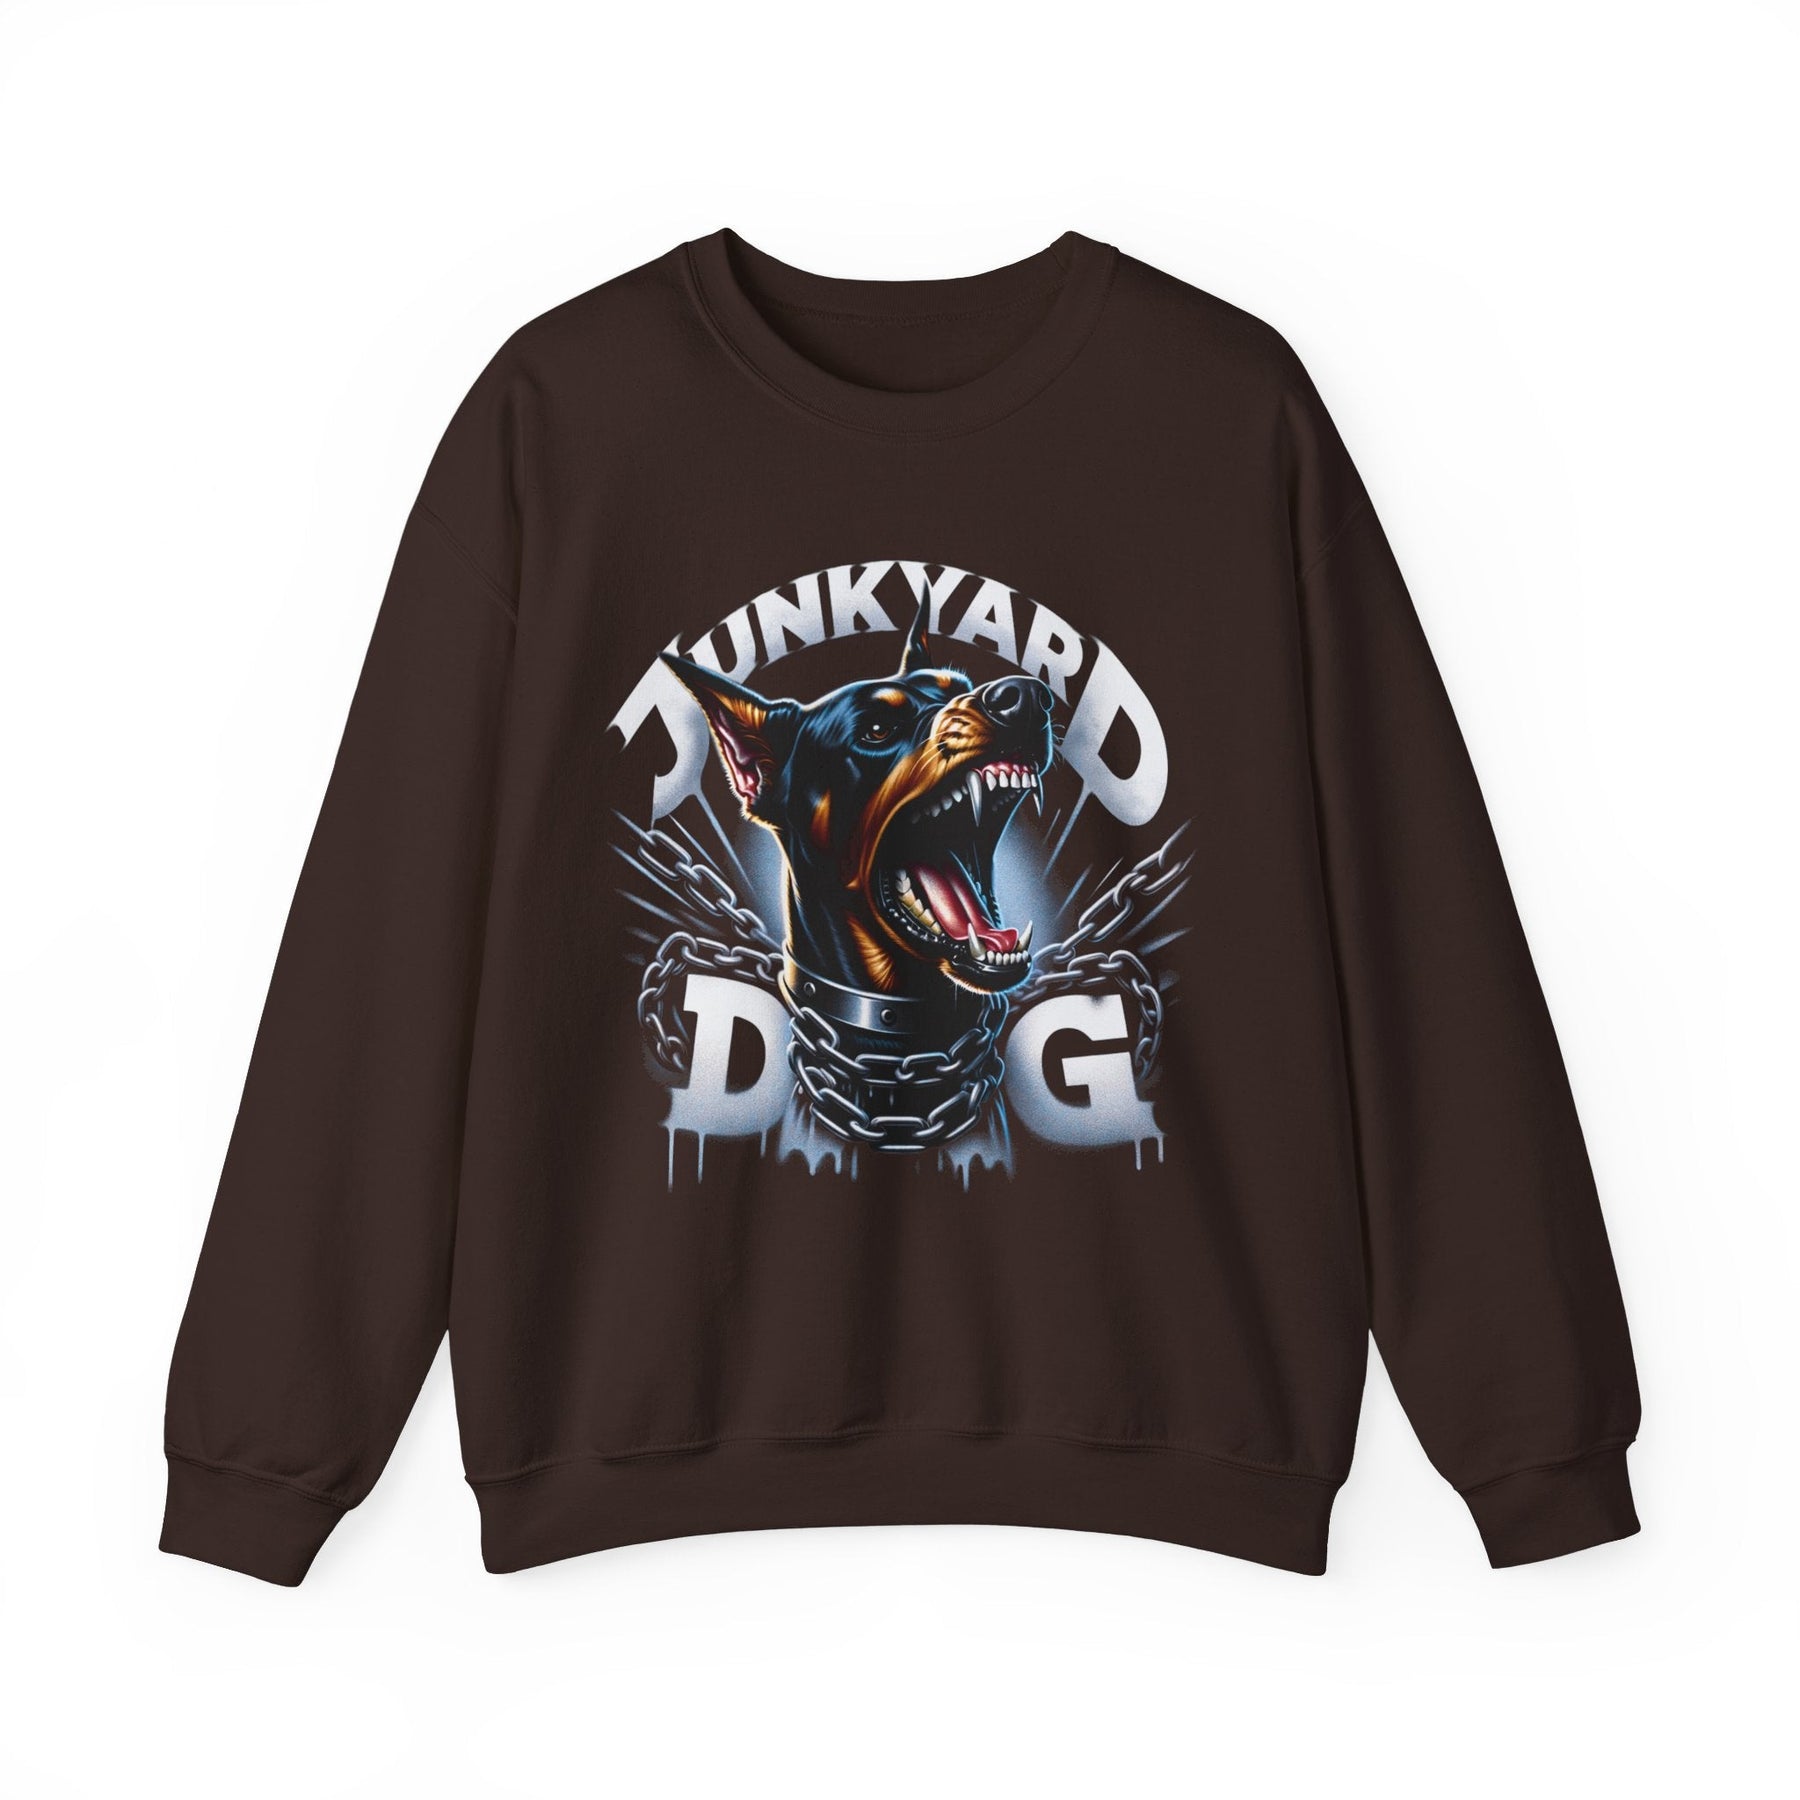 Junkyard Dog Crewneck Sweatshirt - Goth Cloth Co.Sweatshirt17019348689077782680